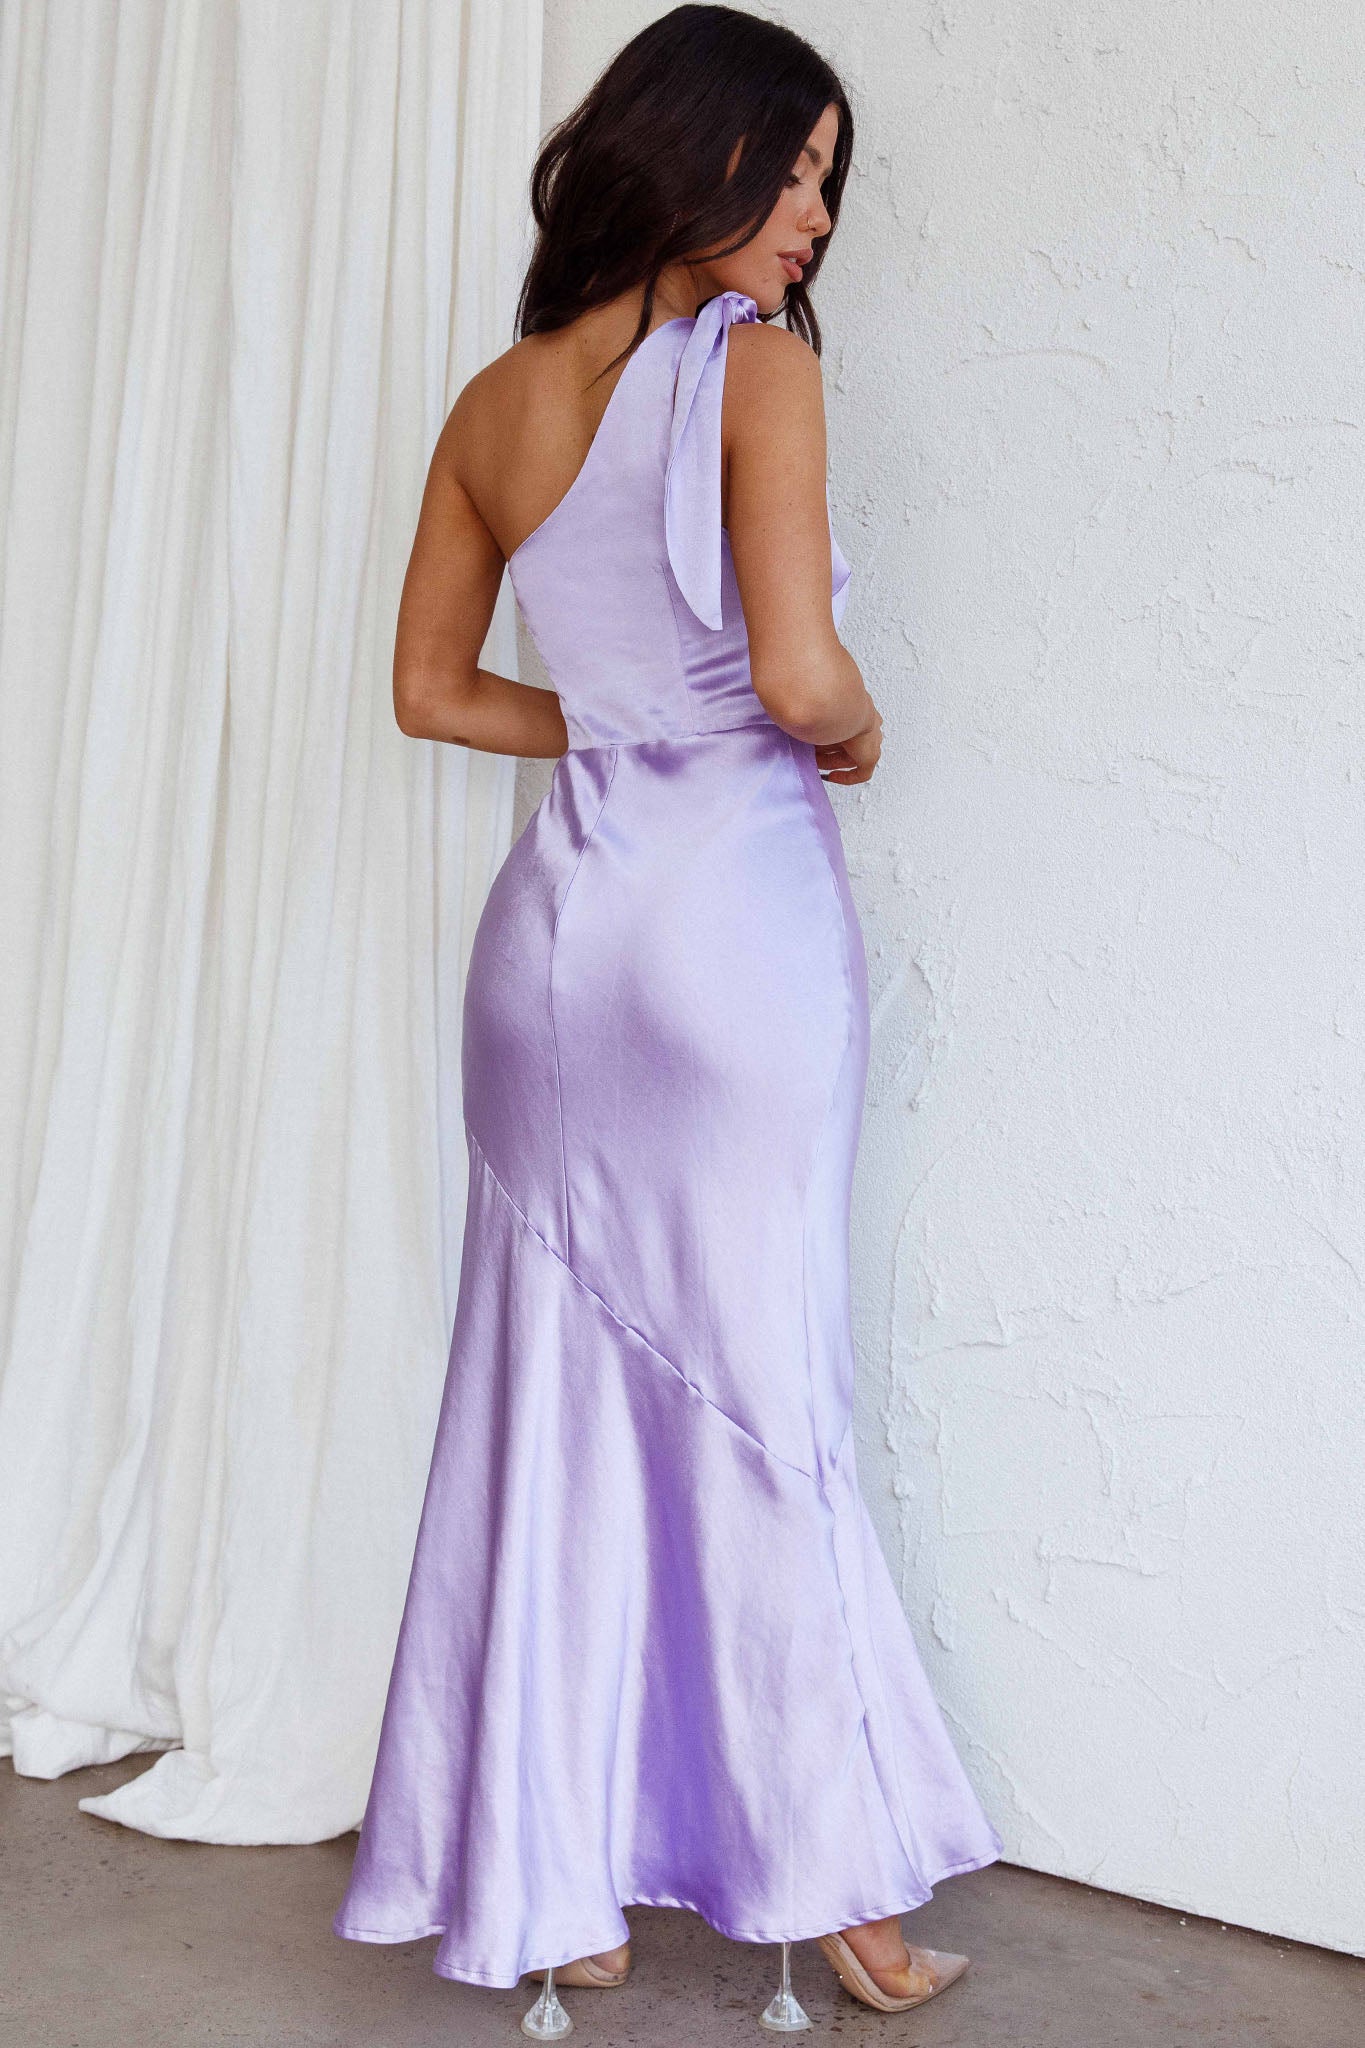 Shop the Eleanora One-Shoulder Satin Dress Lilac